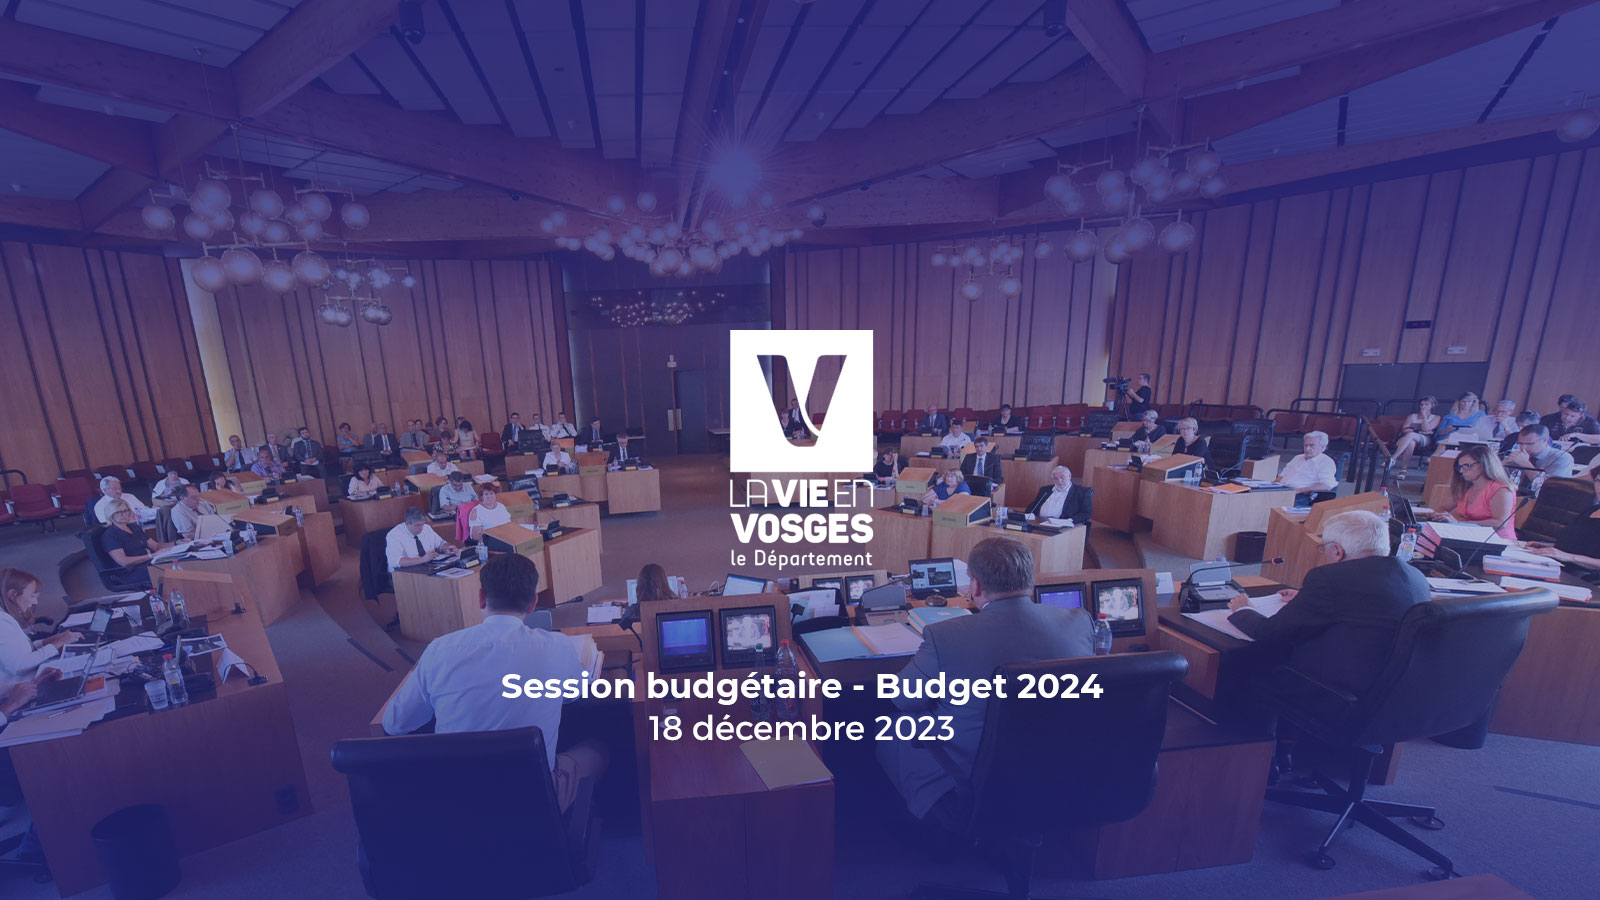 Session budgétaire - Budget 2024